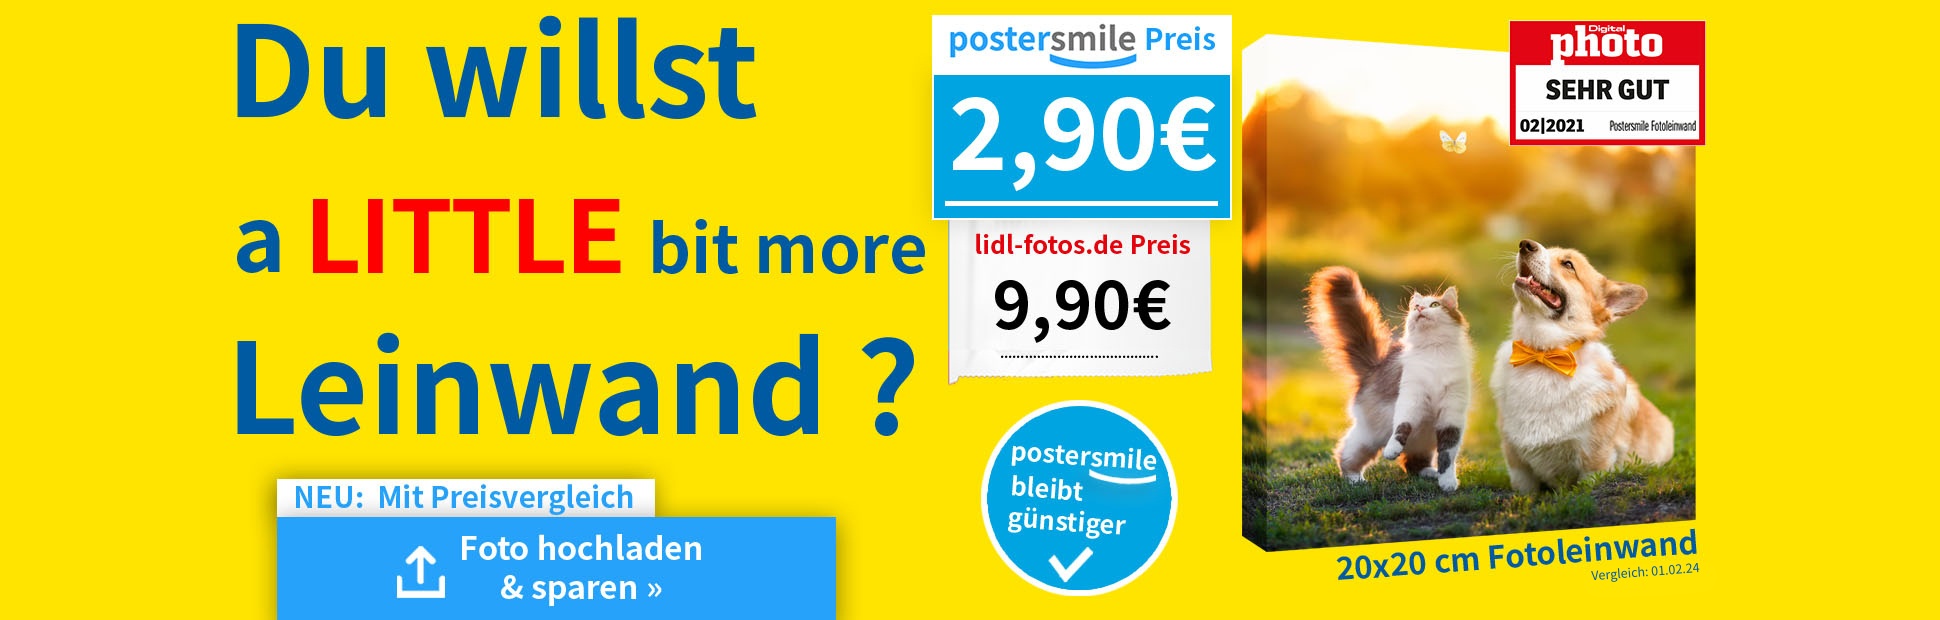 Fotoleinwand günstig - Foto auf Leinwand Preisvergleich postersmile.de vs. Lidl-fotos.de